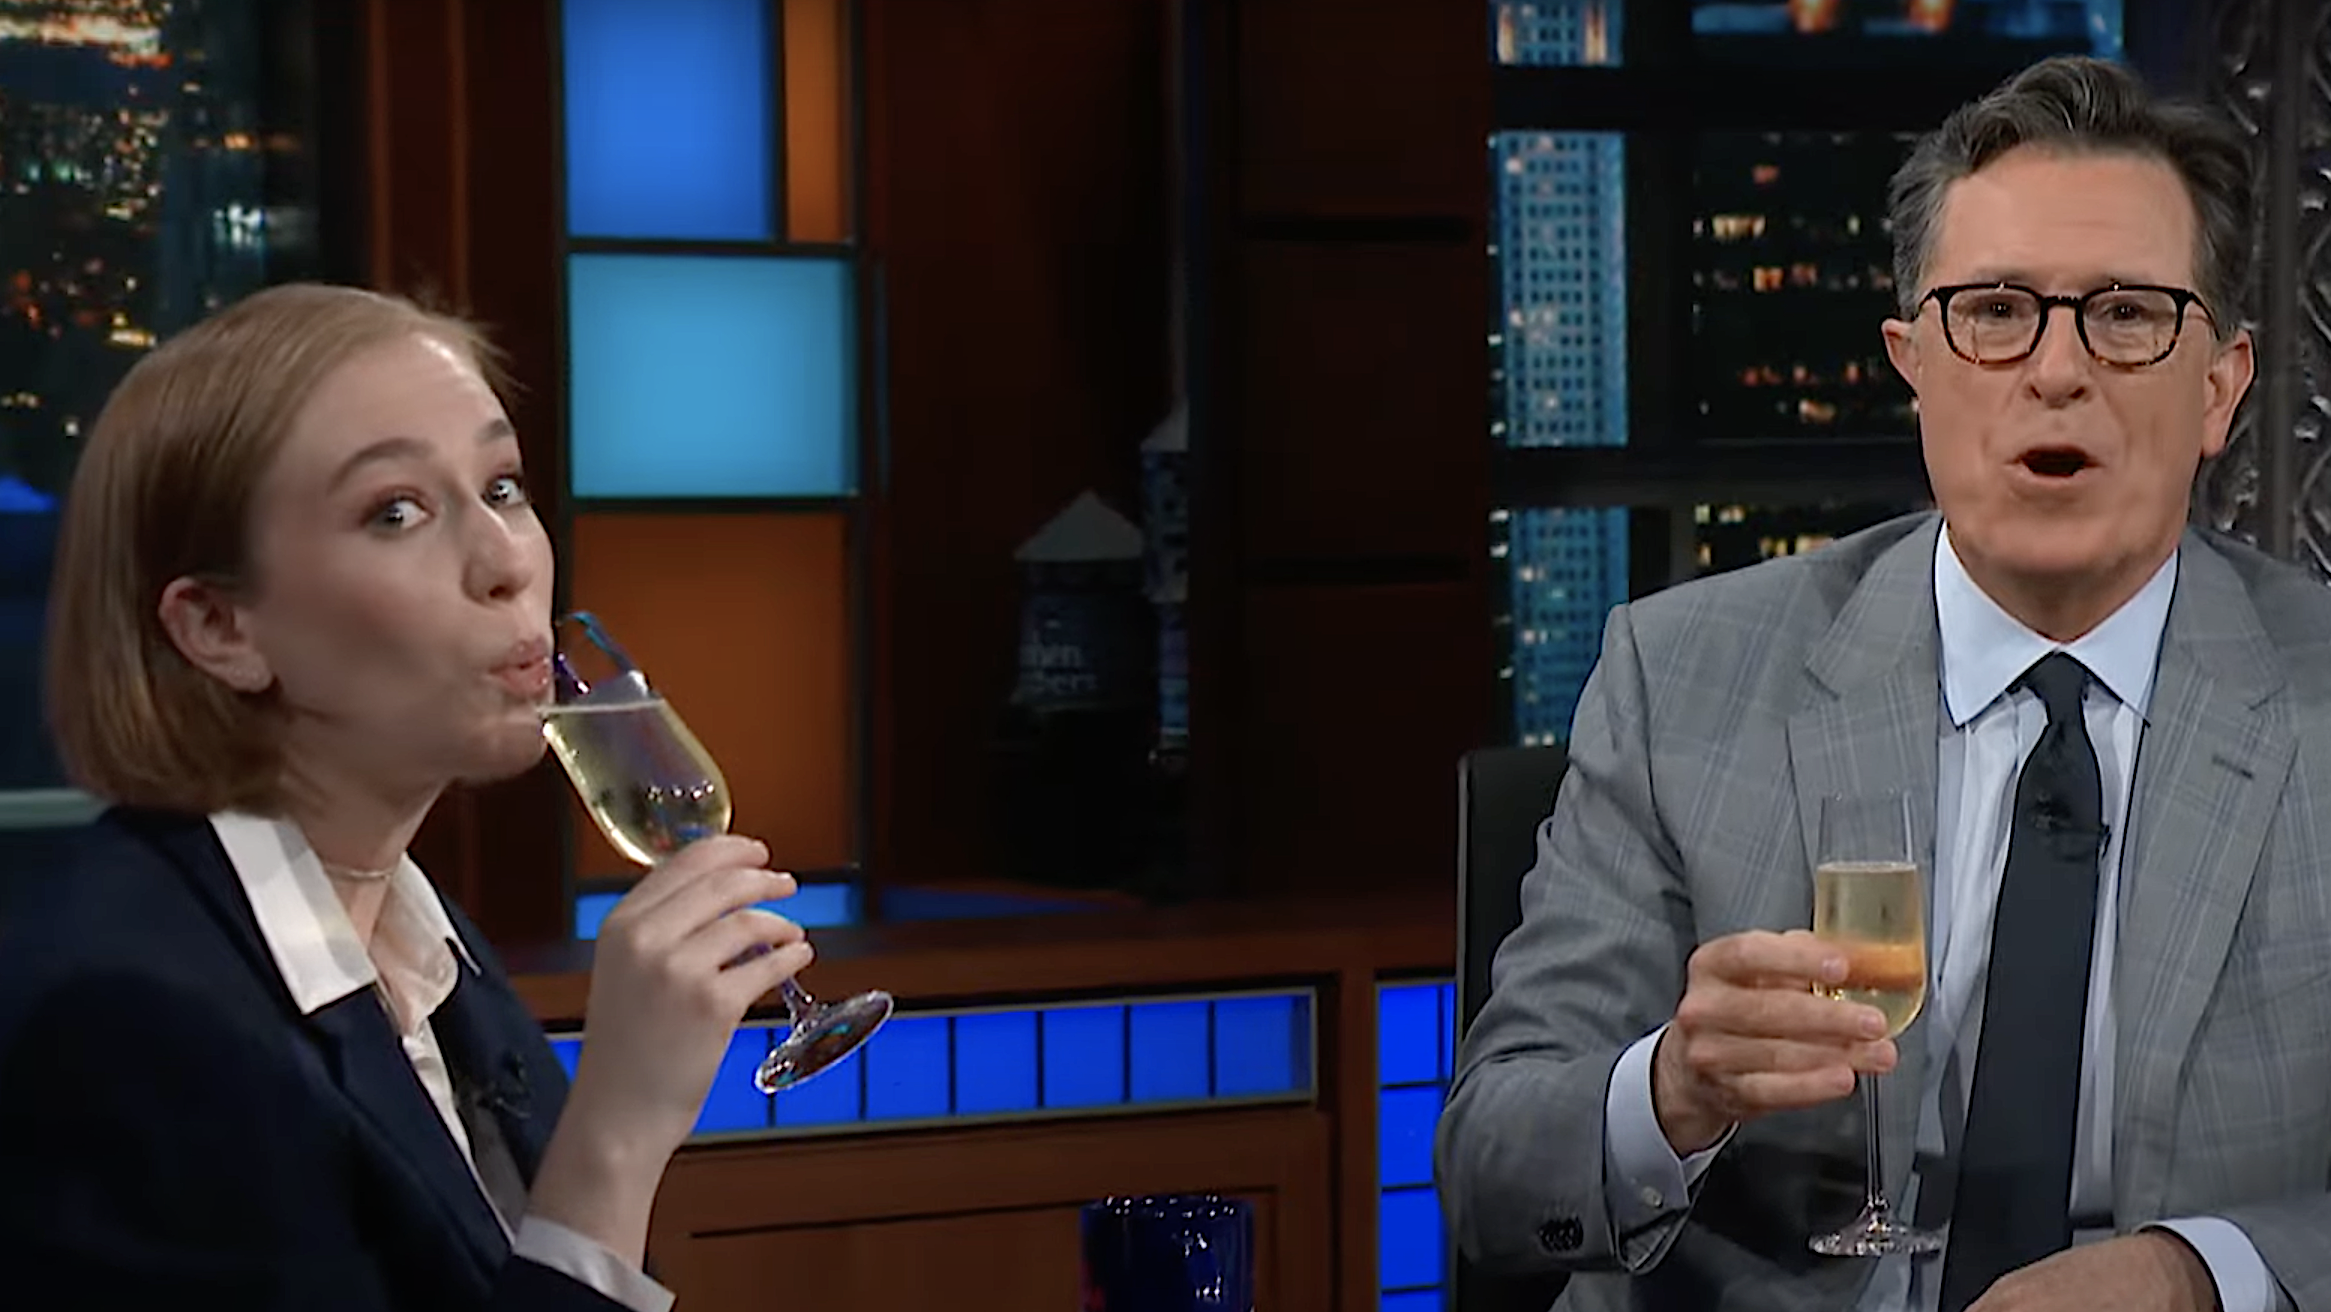 Stephen Colbert toasts Hacks star Hannah Einbinder’s Late Show return with apology champagne, socks